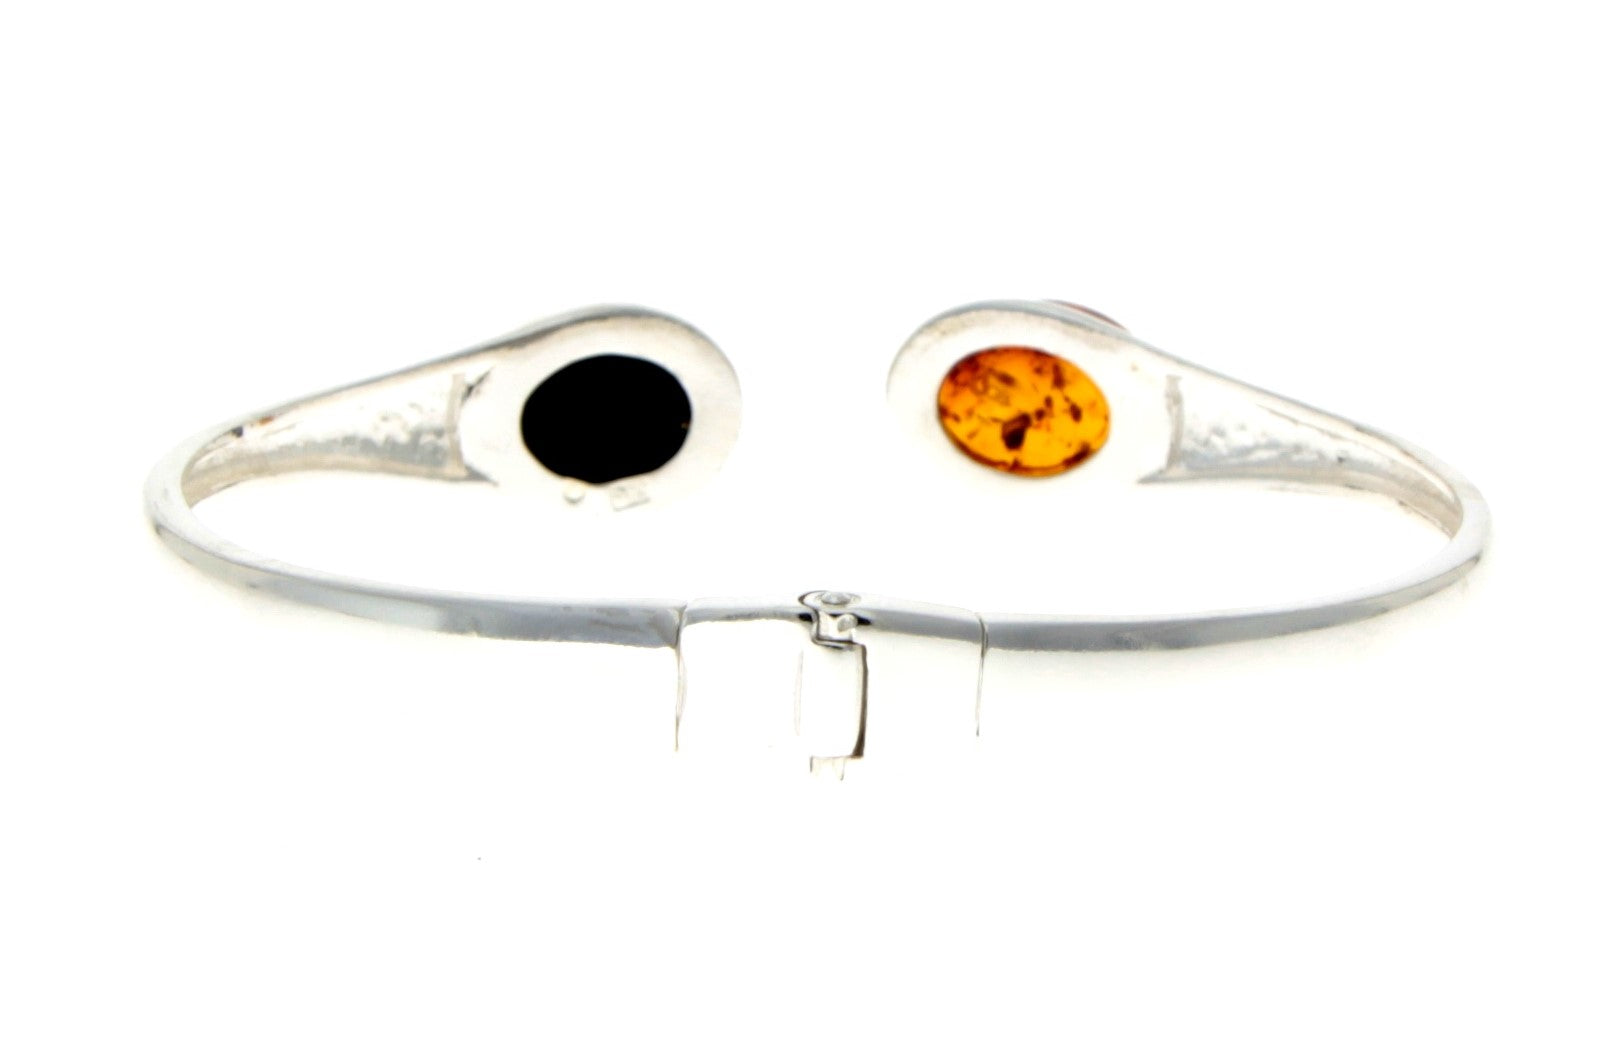 Beautiful Designer Silver Bracelet set with Baltic Amber - GL540 - SilverAmberJewellery